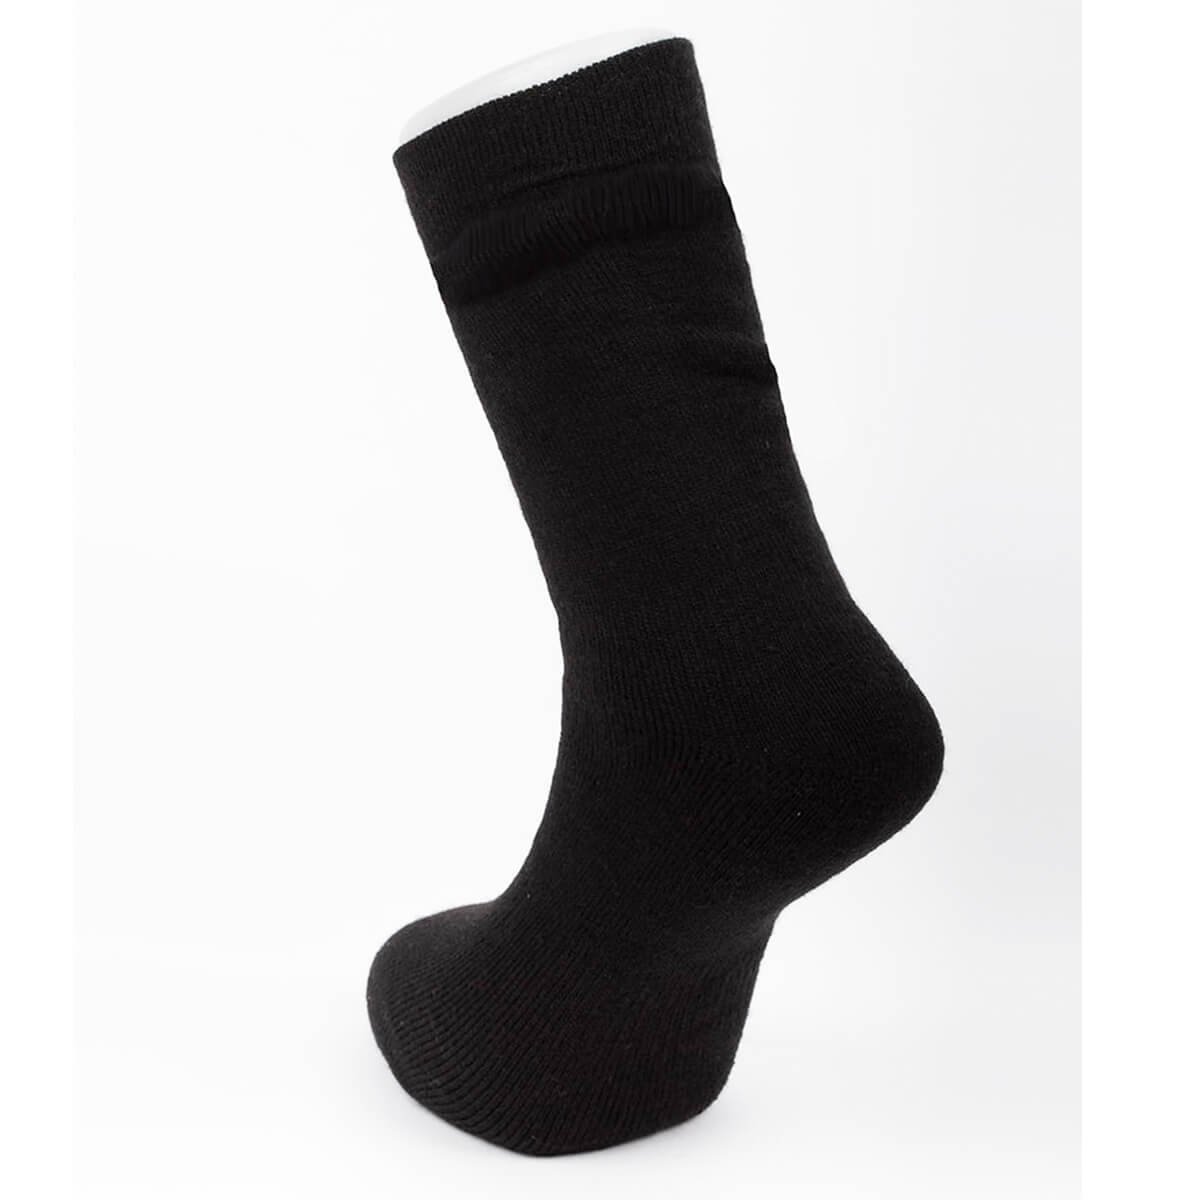 Feeet The Boot Woolen Sock - John Bull Clothing